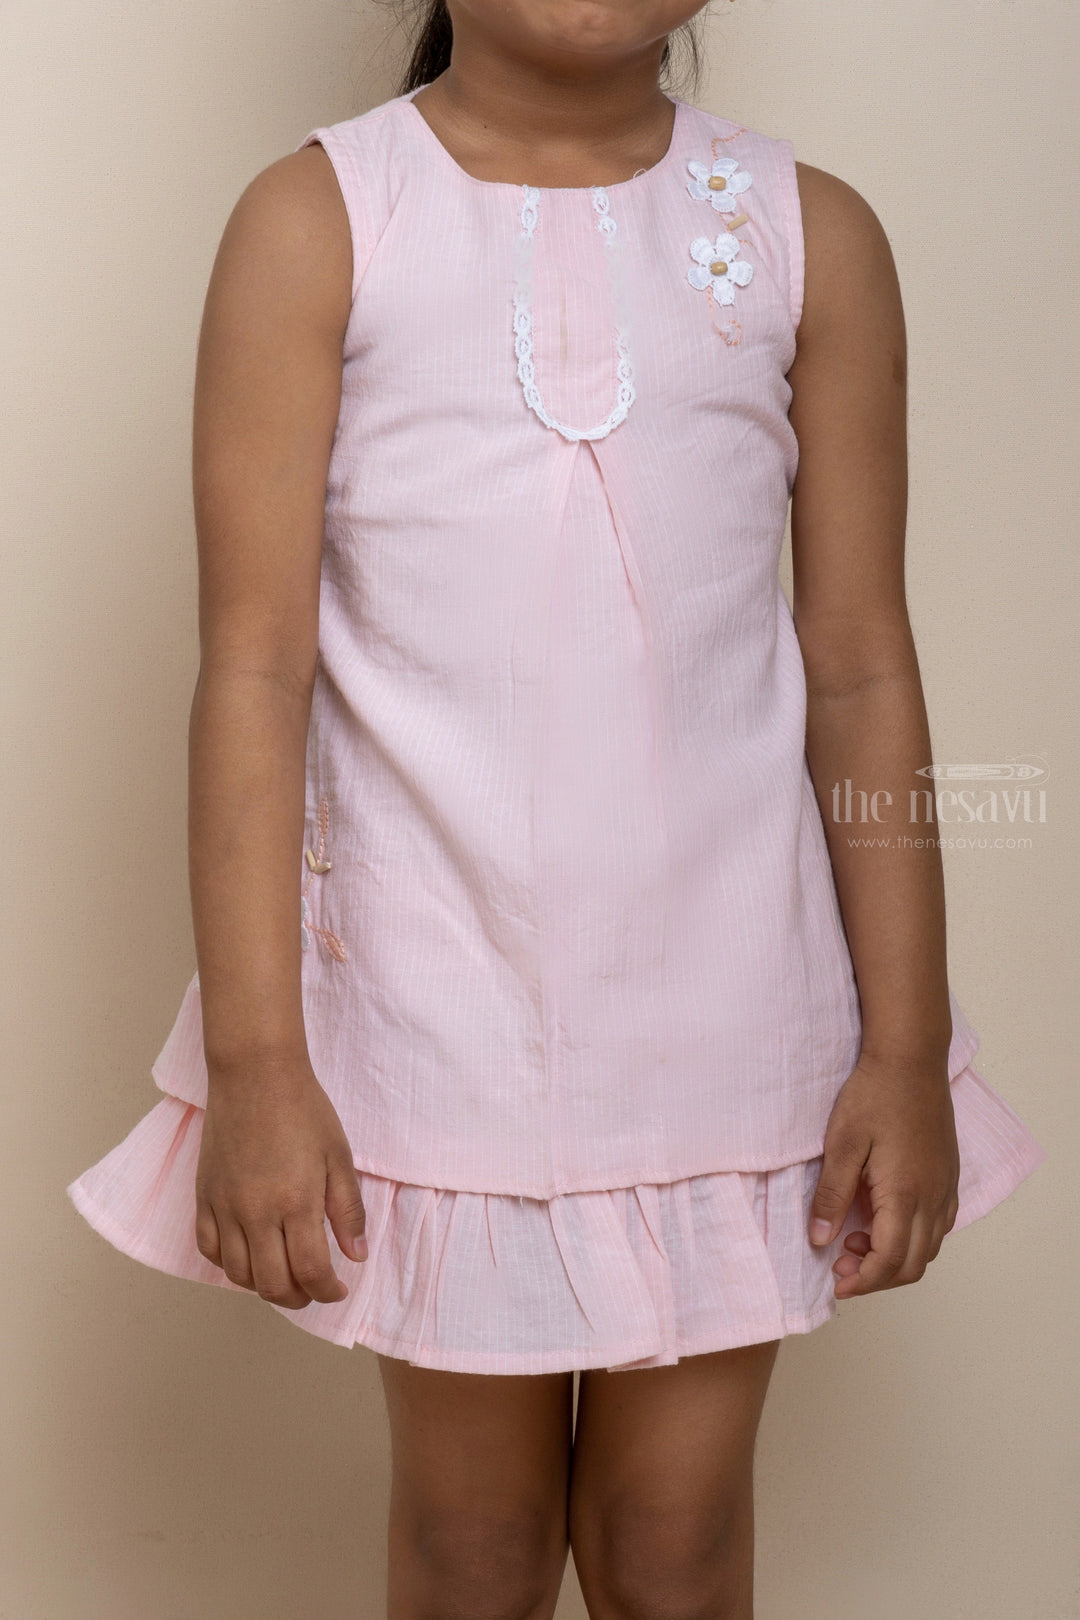 The Nesavu Baby Frock / Jhabla Light Peach Pink A-Line Cotton Gown For New Born Baby Girls psr silks Nesavu